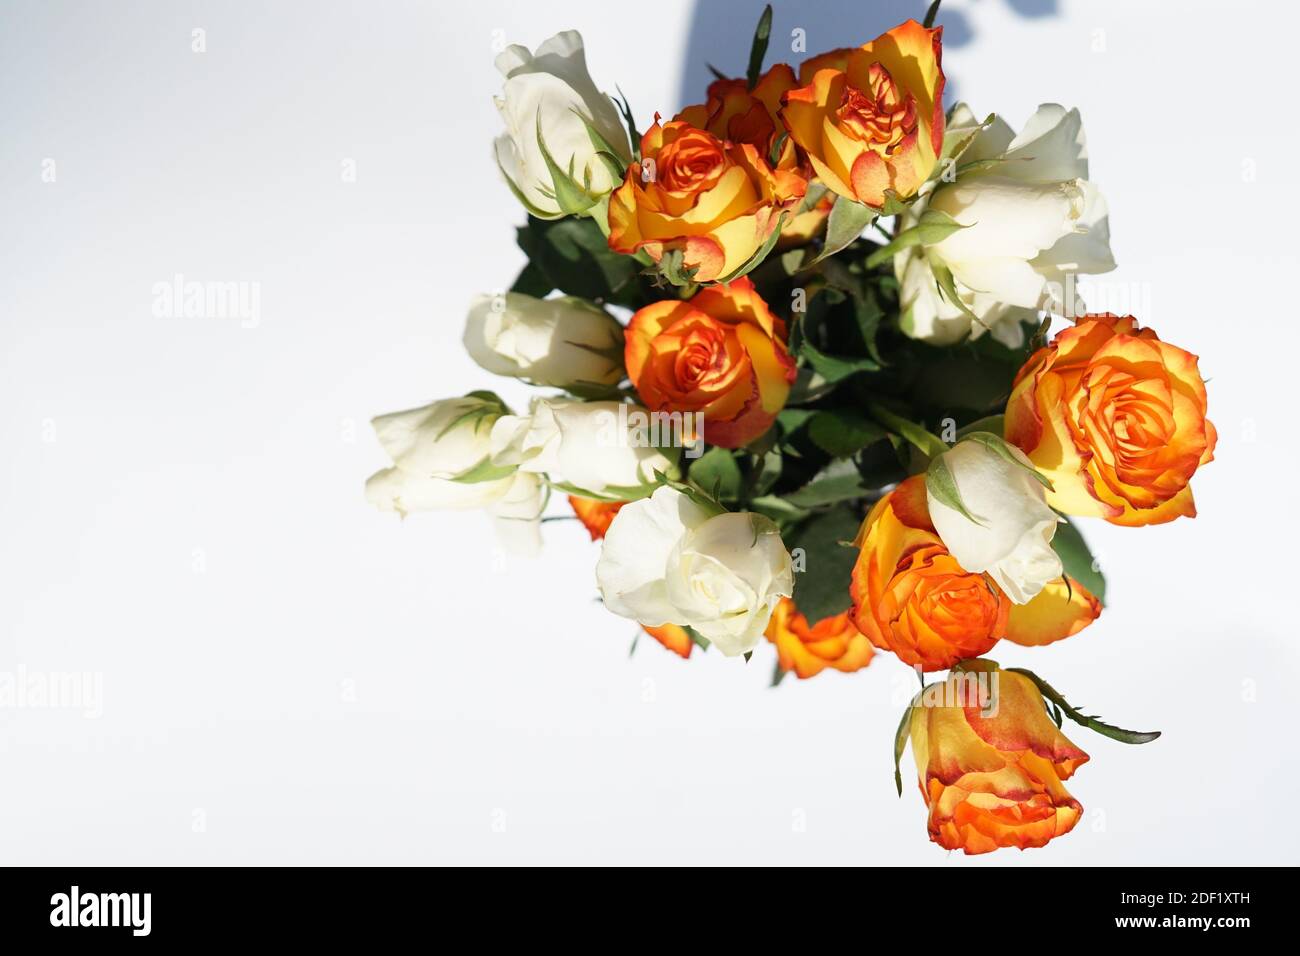 Rose Bruciate Immagini e Fotos Stock - Alamy